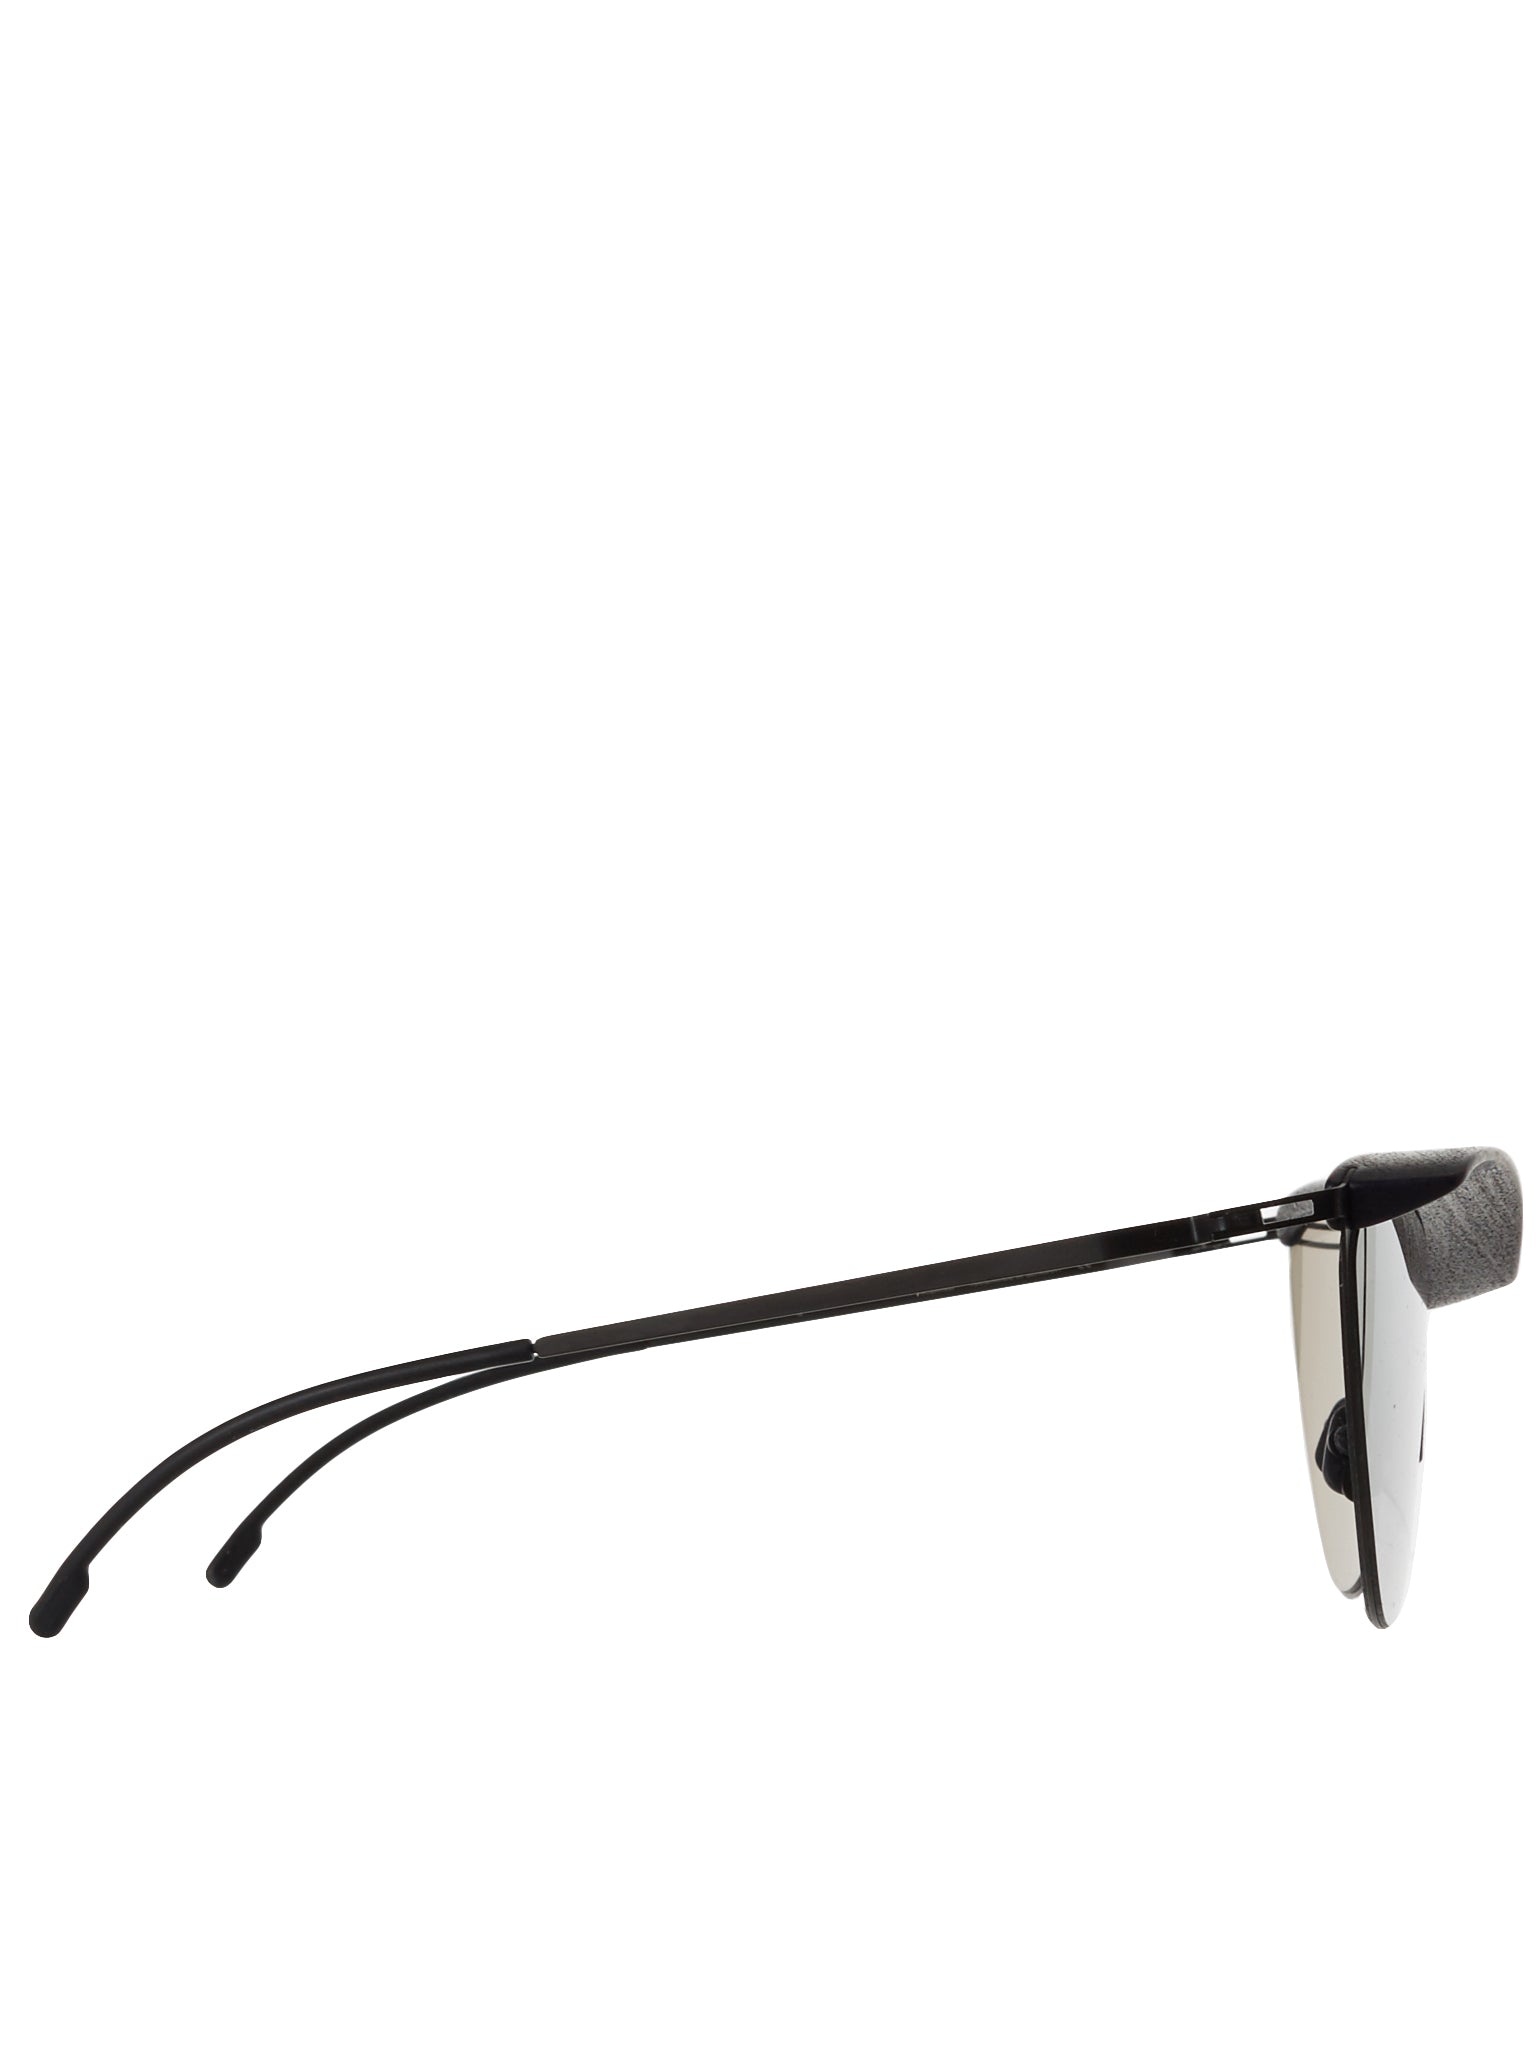 'MMECHO002' Cat Eye Sunglasses (MMECHO002-MH6-PBLK-BLK-DGREY)